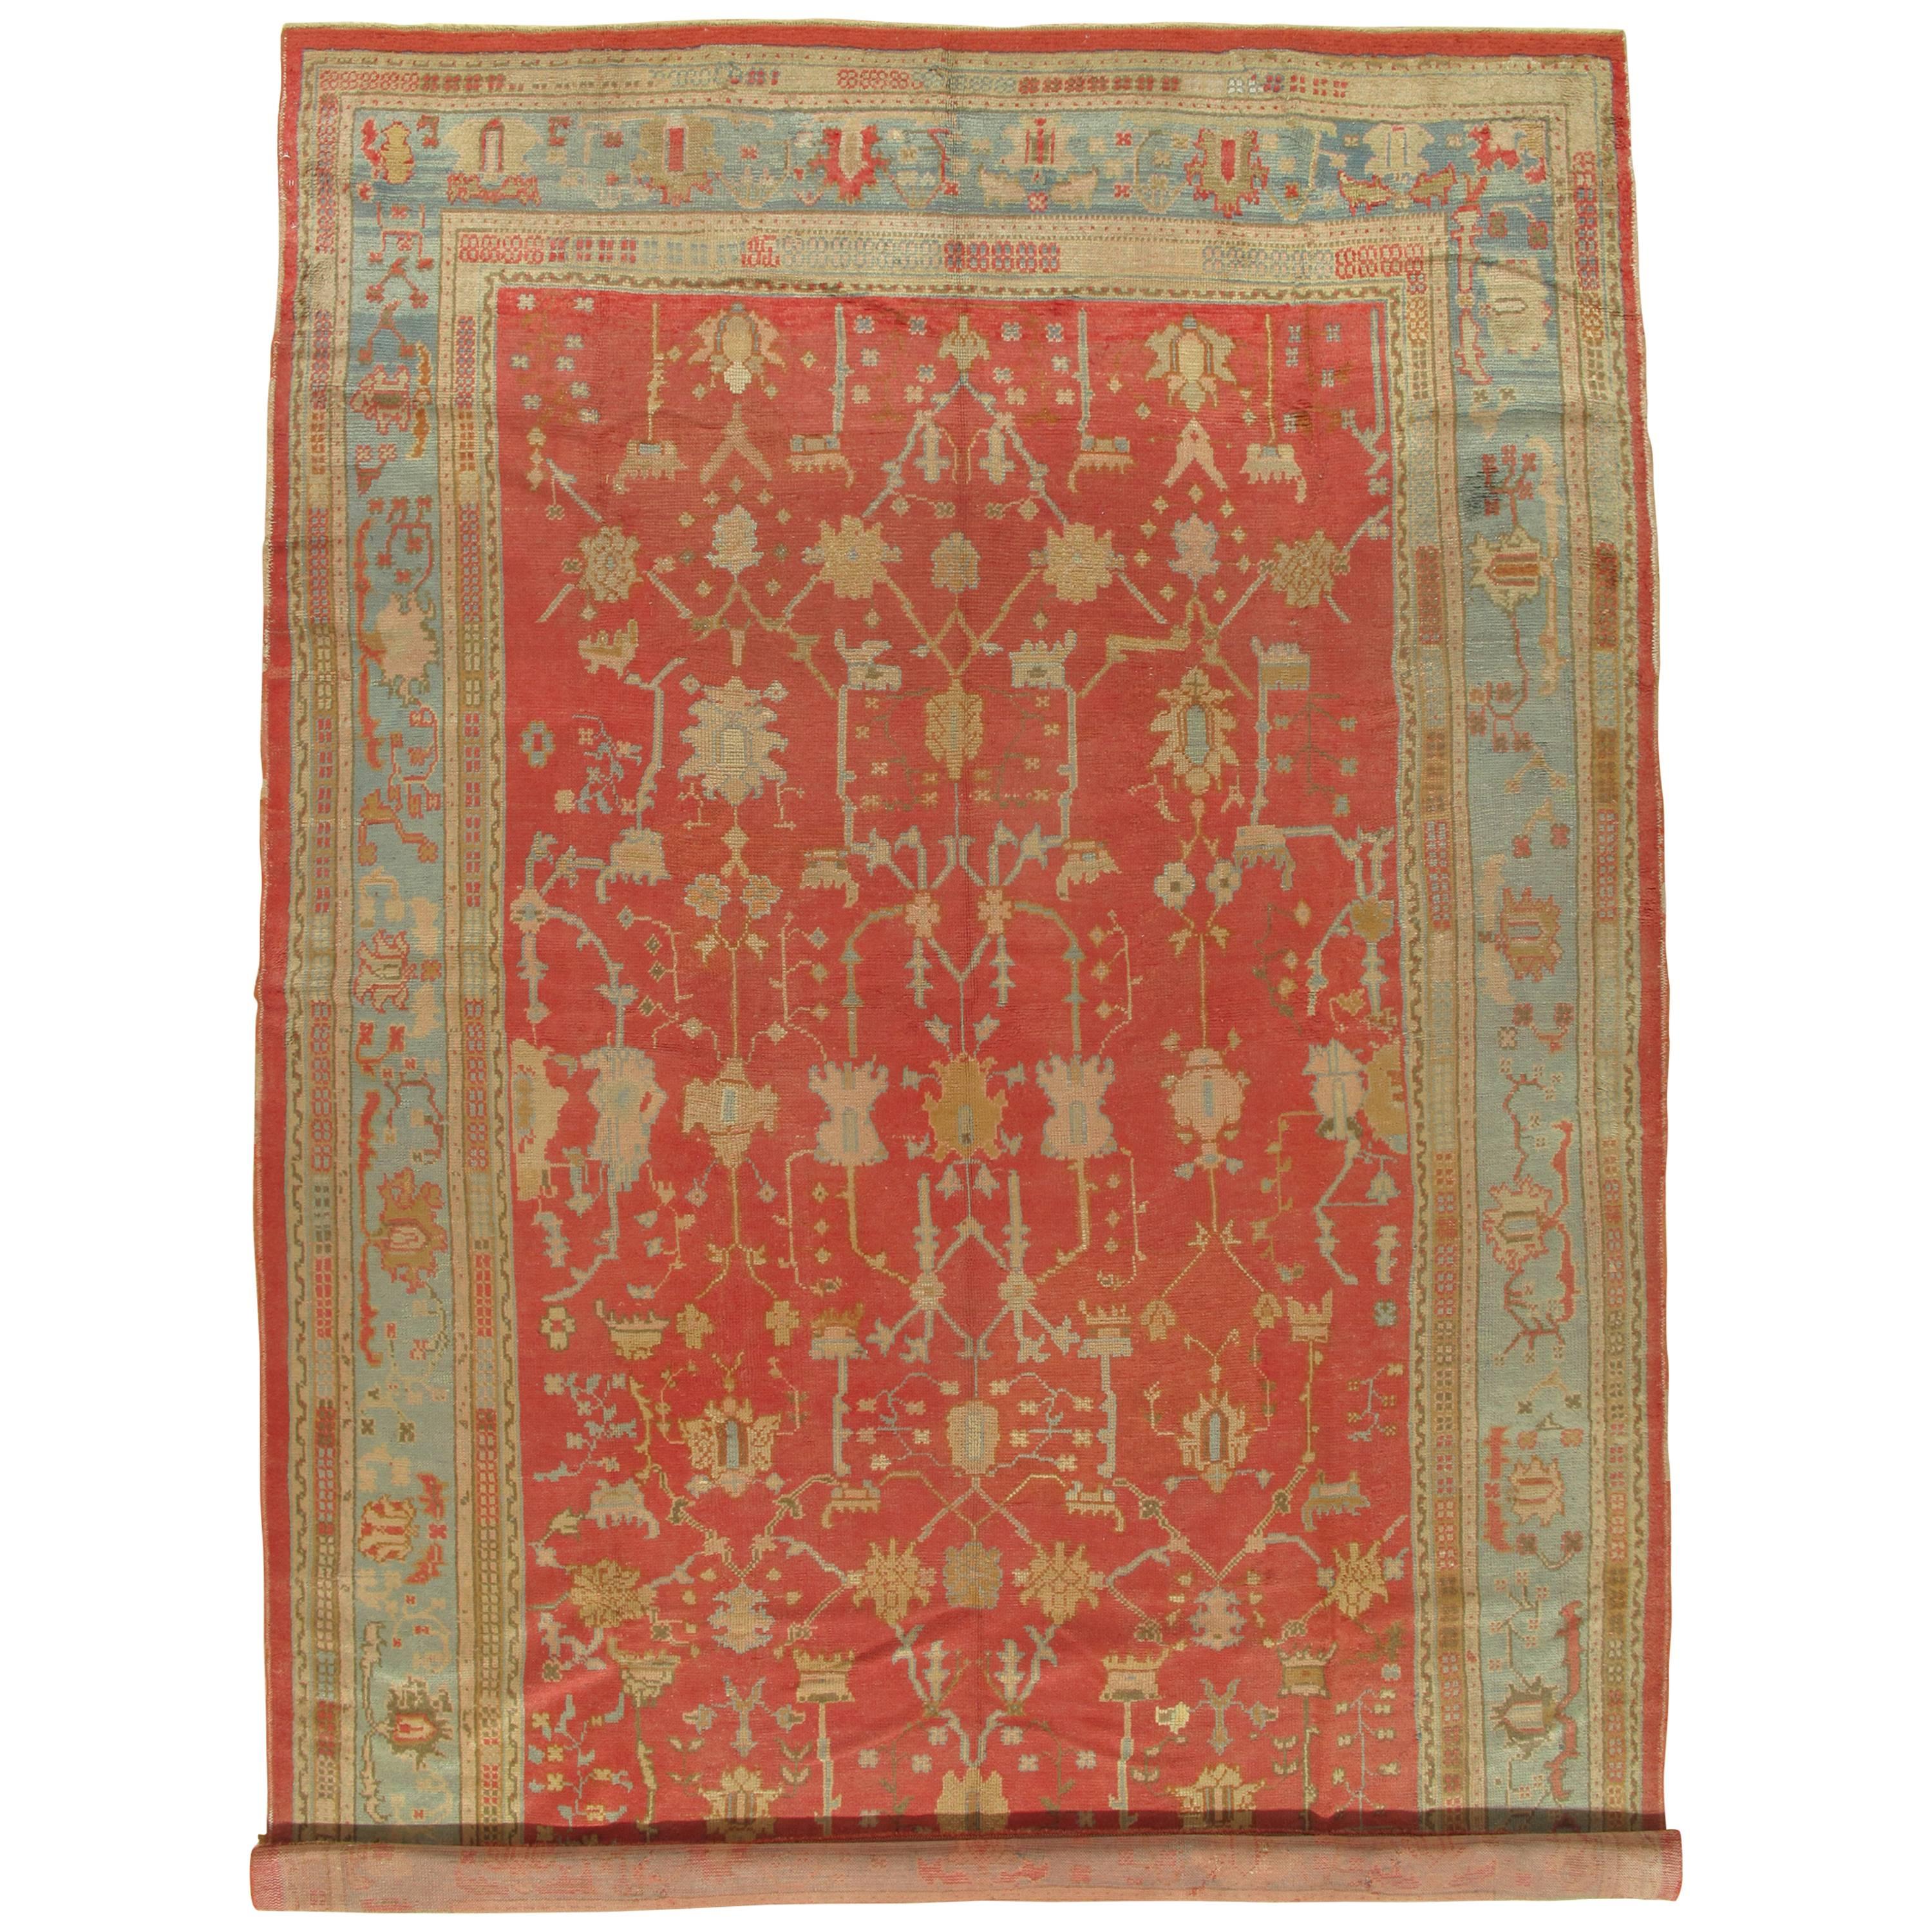 Antique Oushak Carpet, Oriental Rug, Handmade Coral, Ivory and Light Blue, Soft